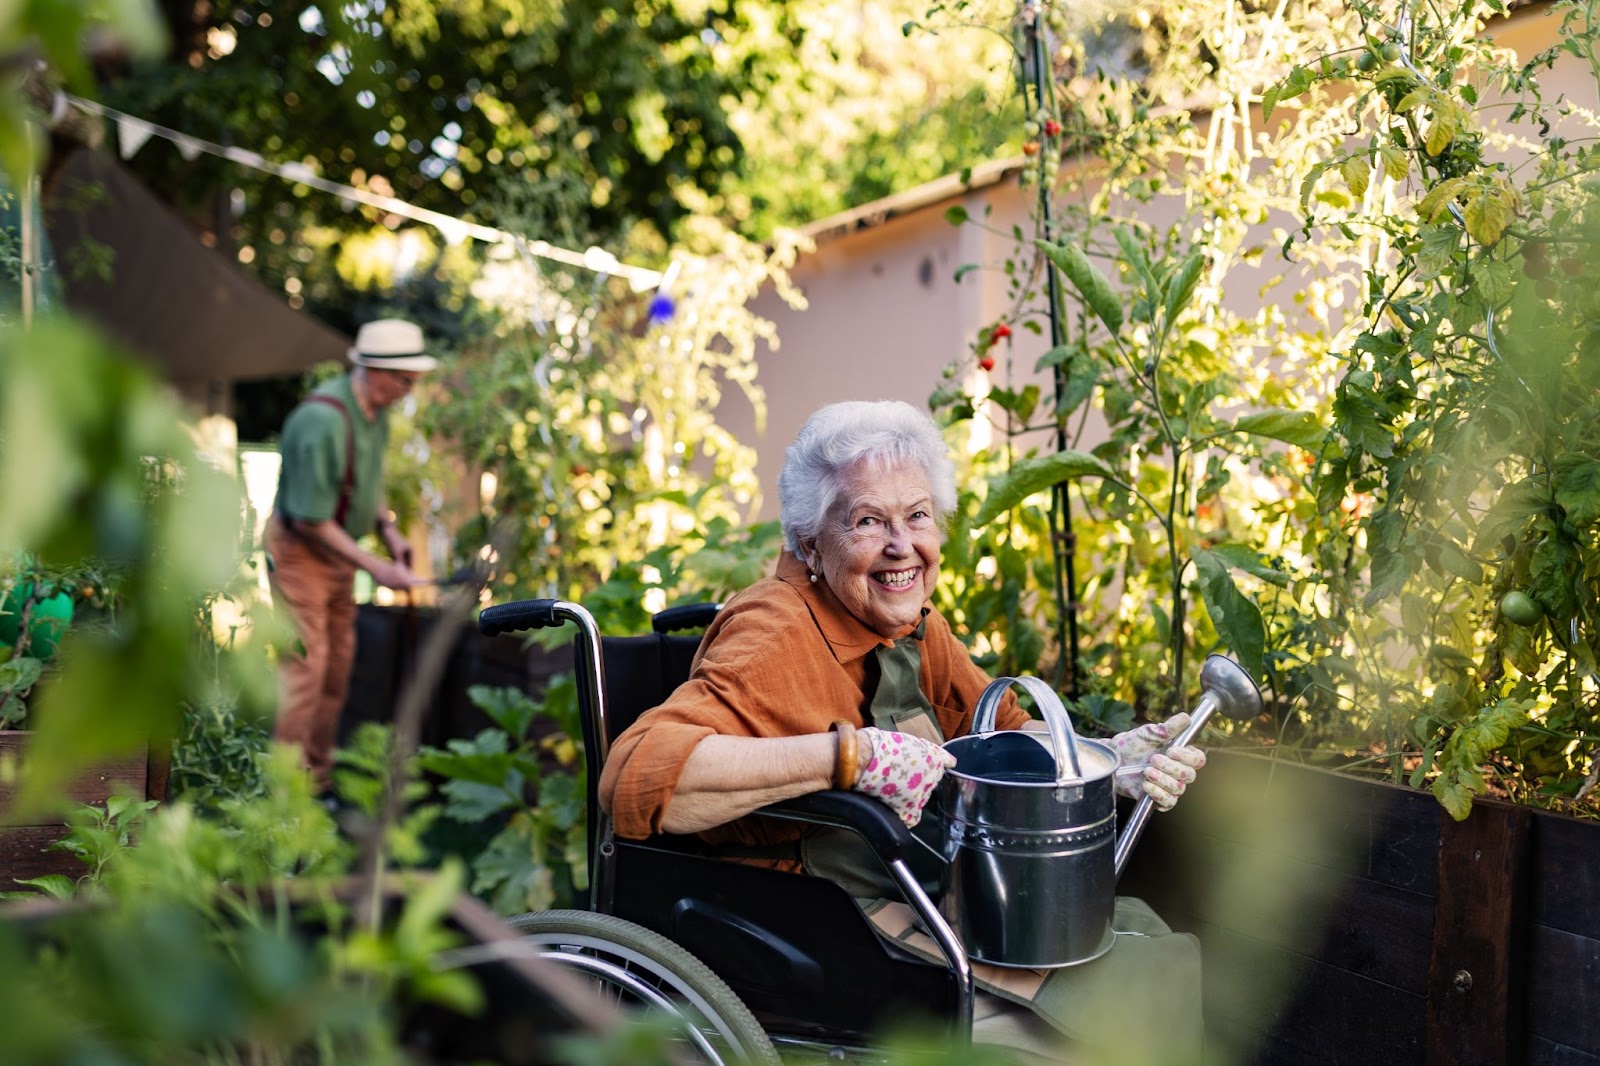 Older adult woman gardening